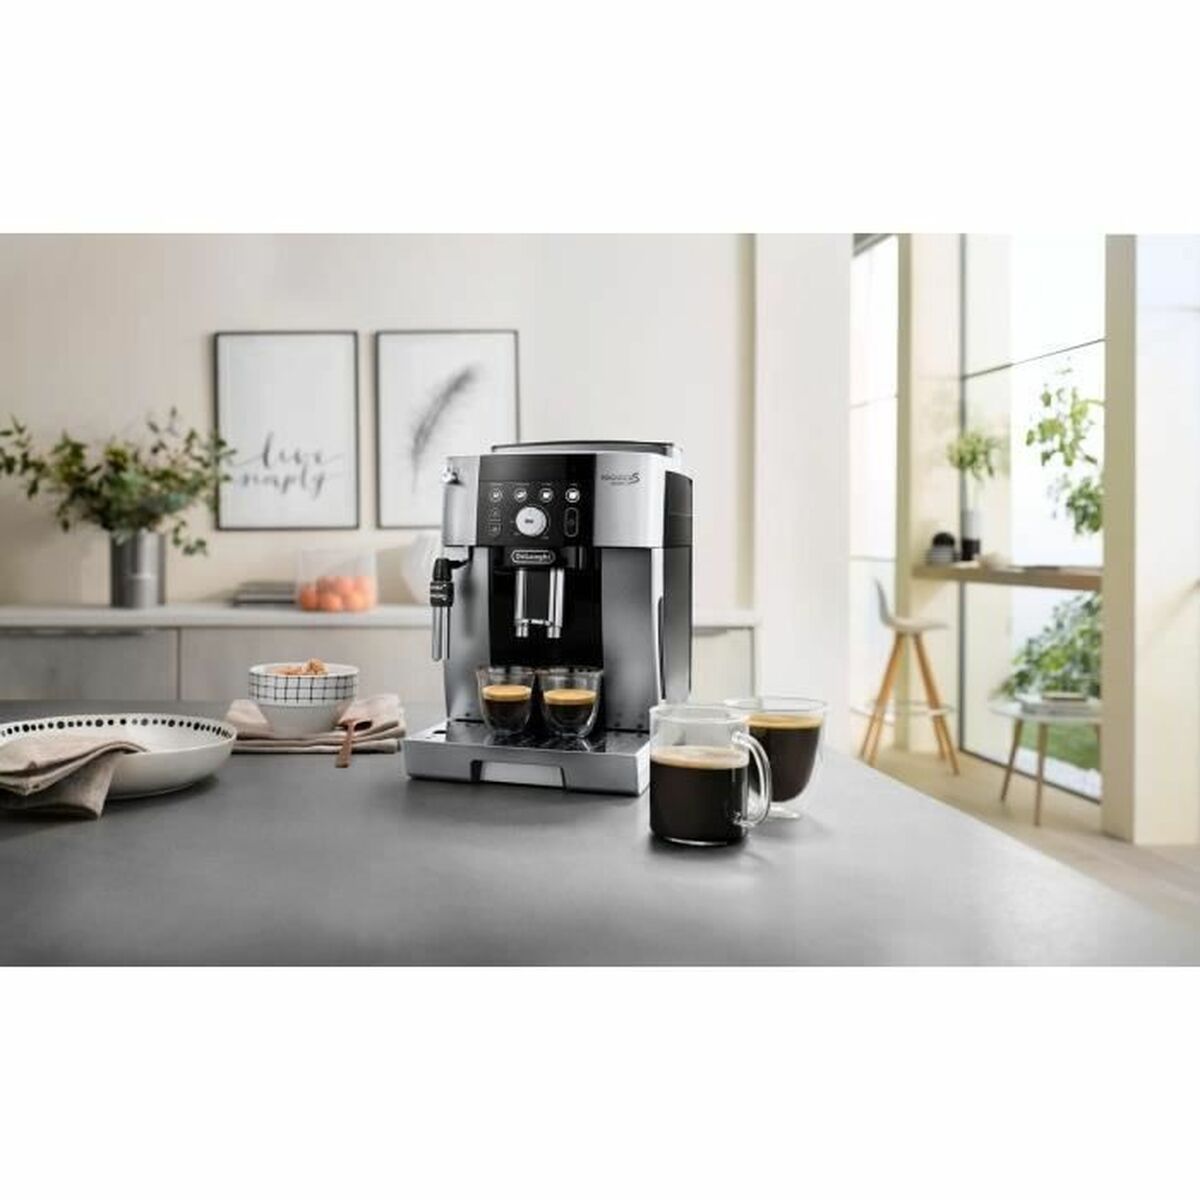 Superautomatische Kaffeemaschine DeLonghi MAGNIFICA S - CA International 